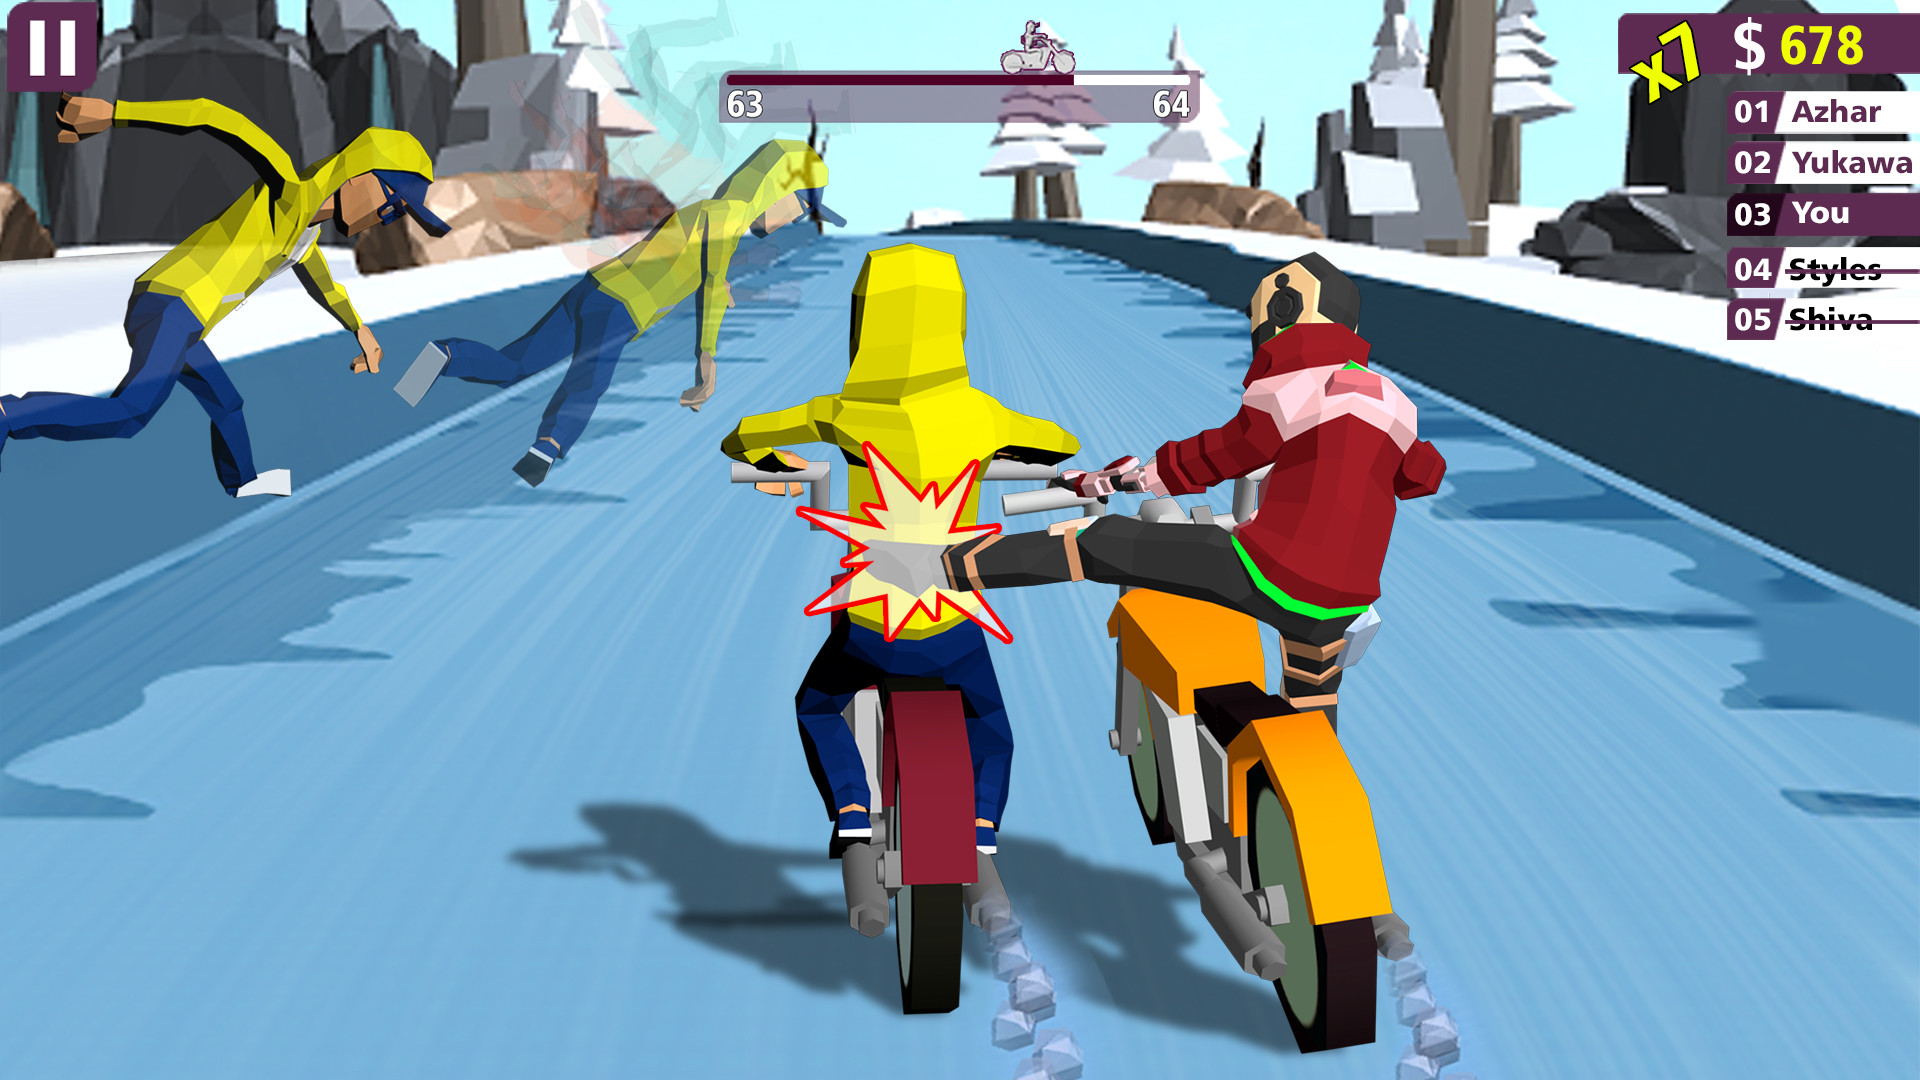 Racing Bike Fight (Corona Virus Lockdown Special) screenshot